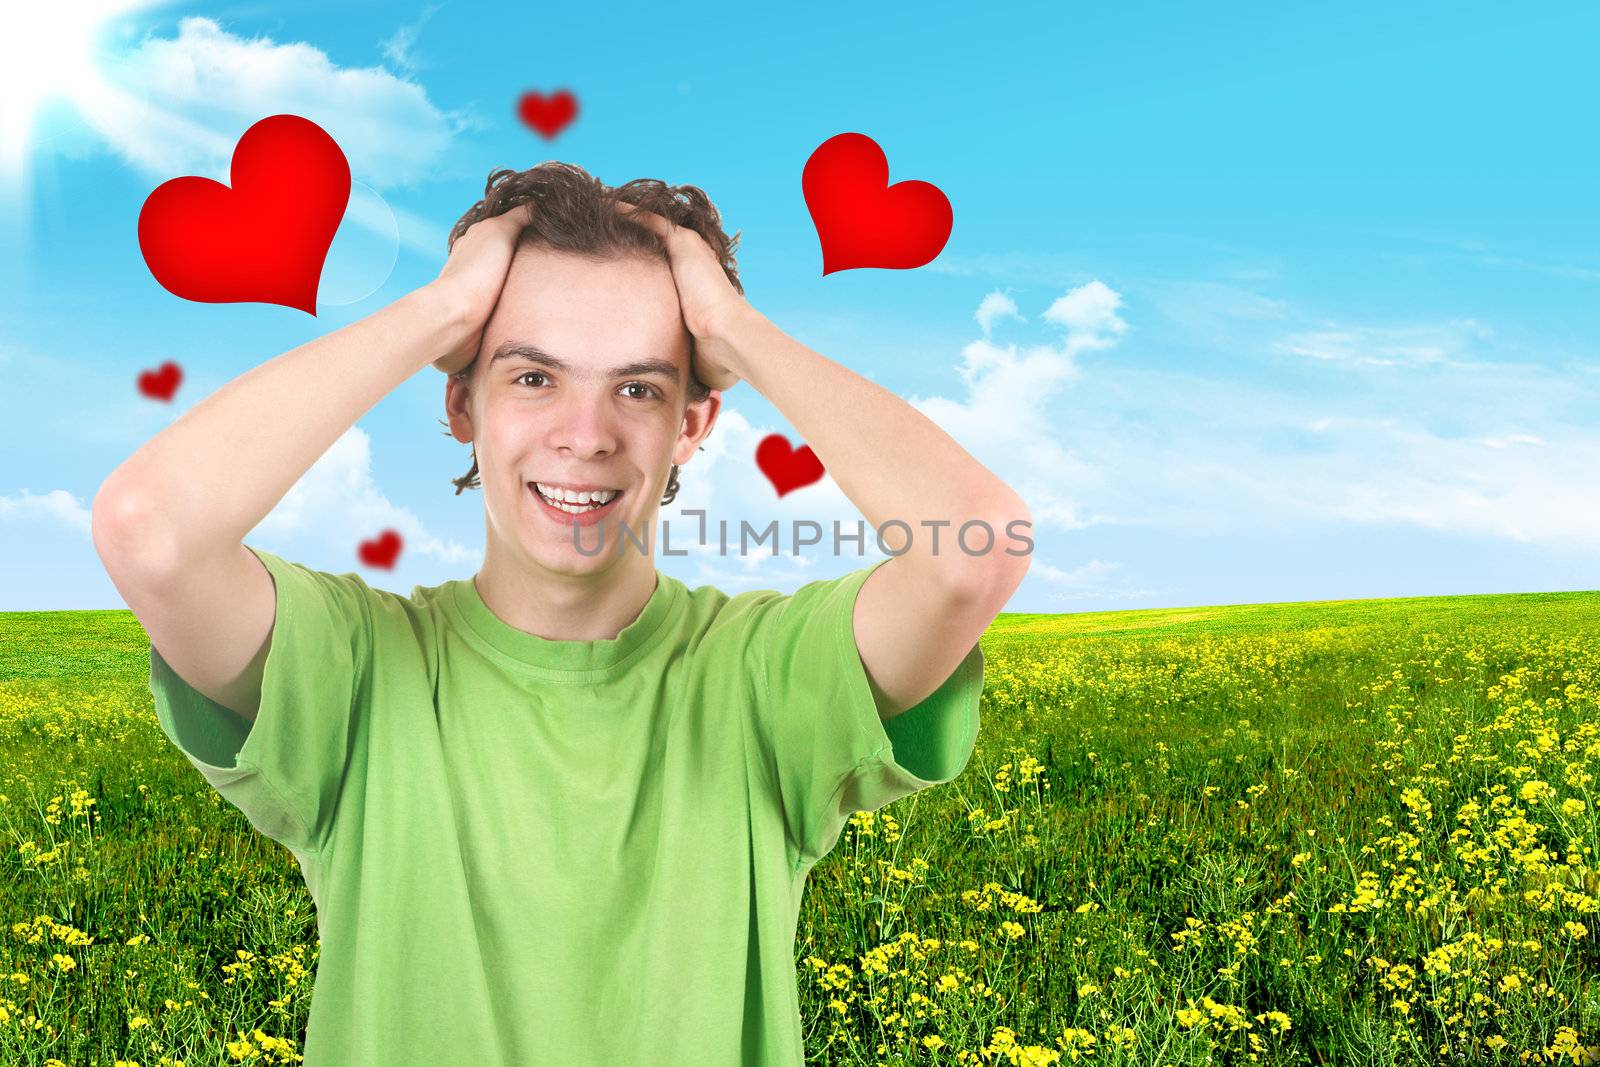 The joyful teenager on a green background. Hearts